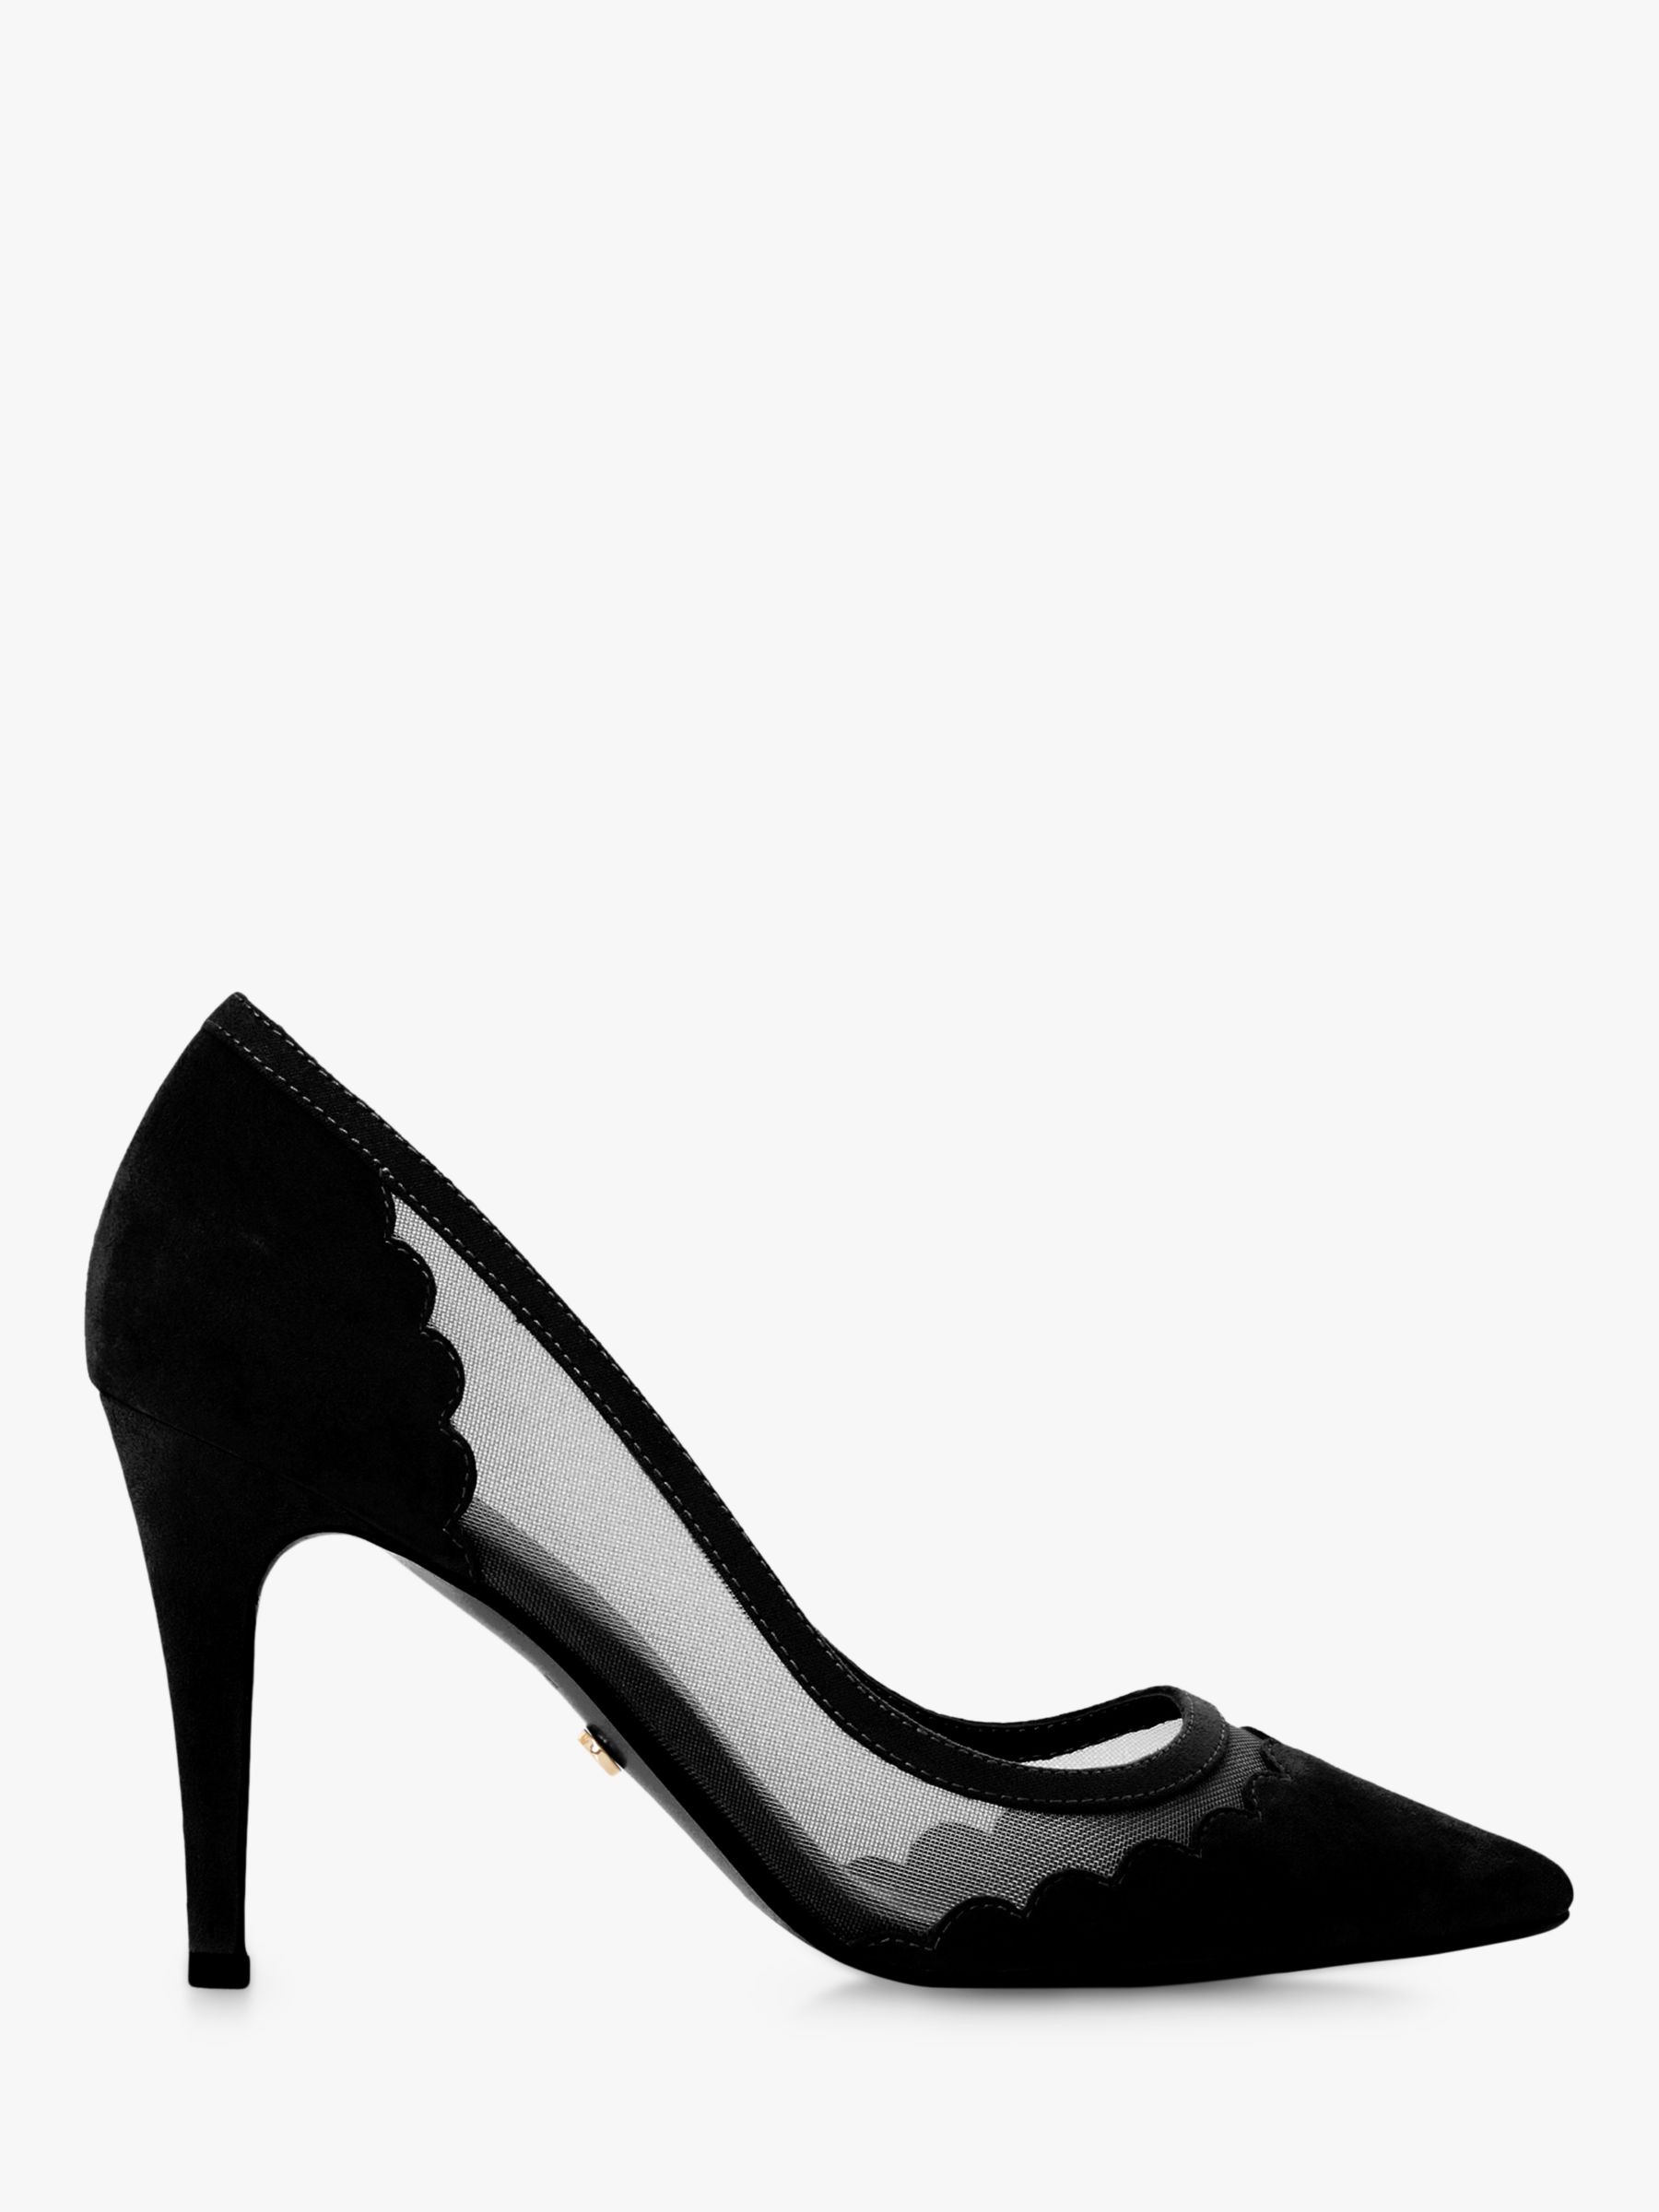 Dune Bellevue Semi Sheer Court Shoes, Black Suede